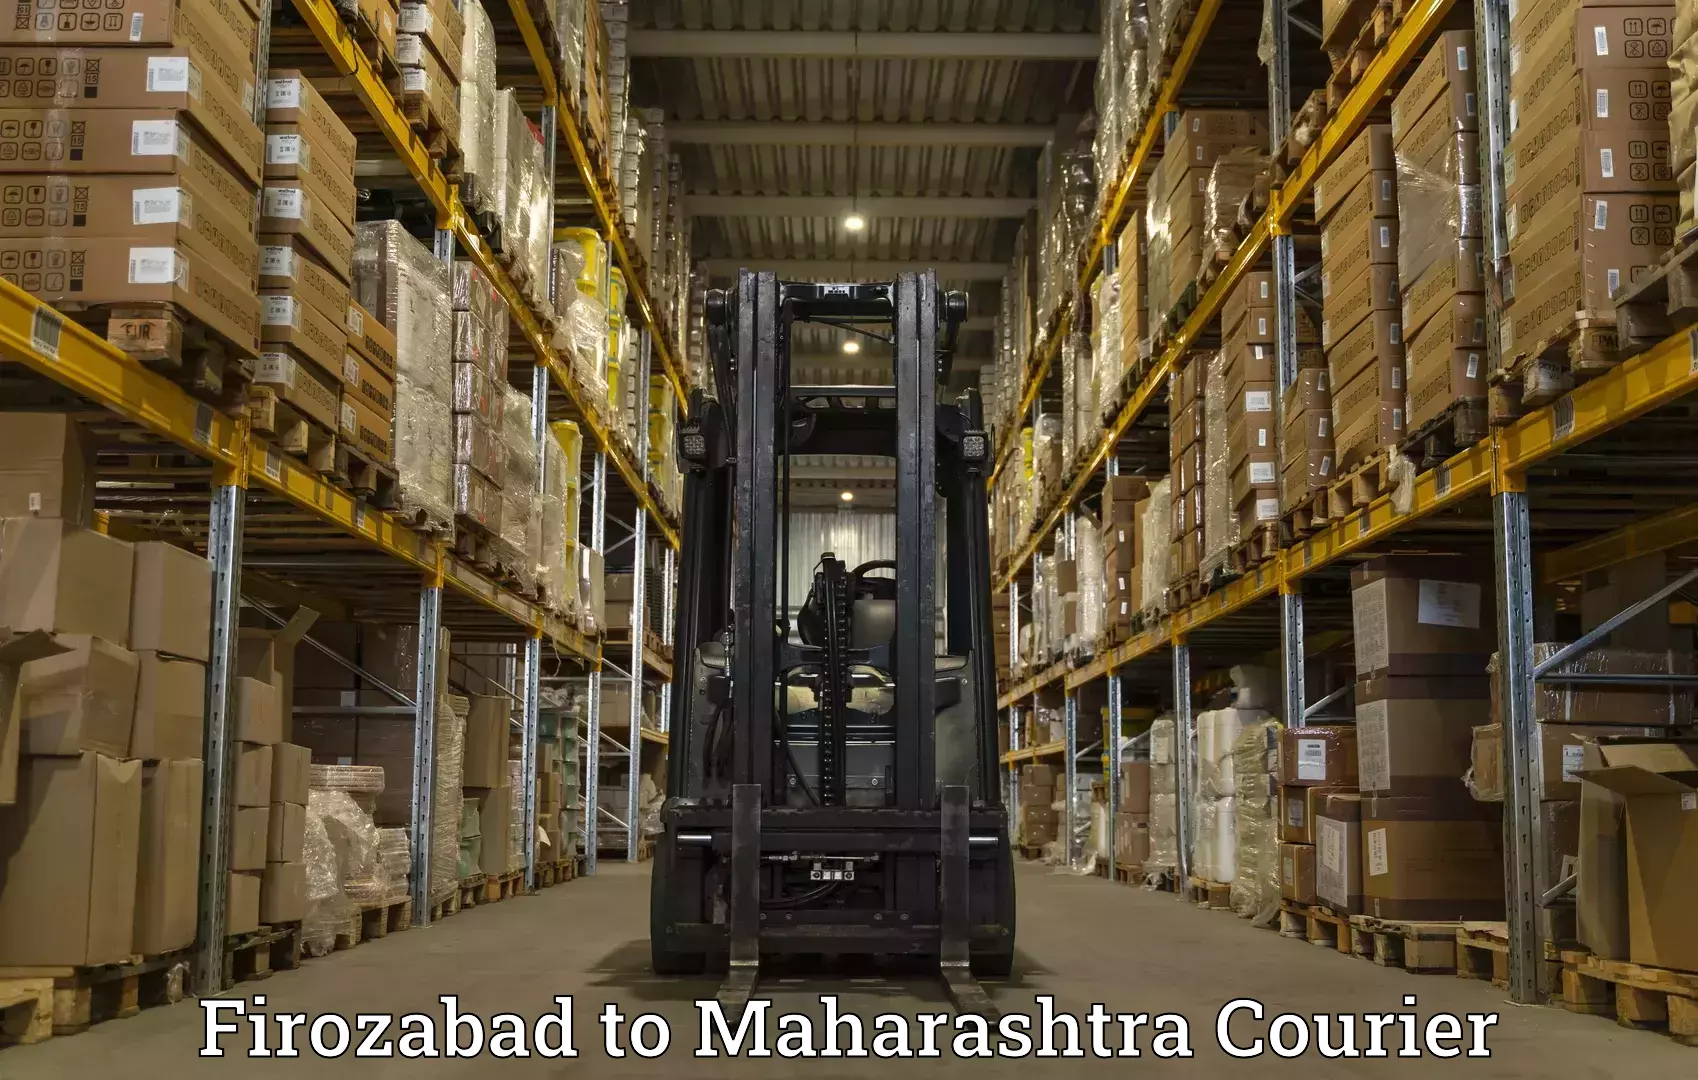 Reliable shipping partners Firozabad to Bhiwandi